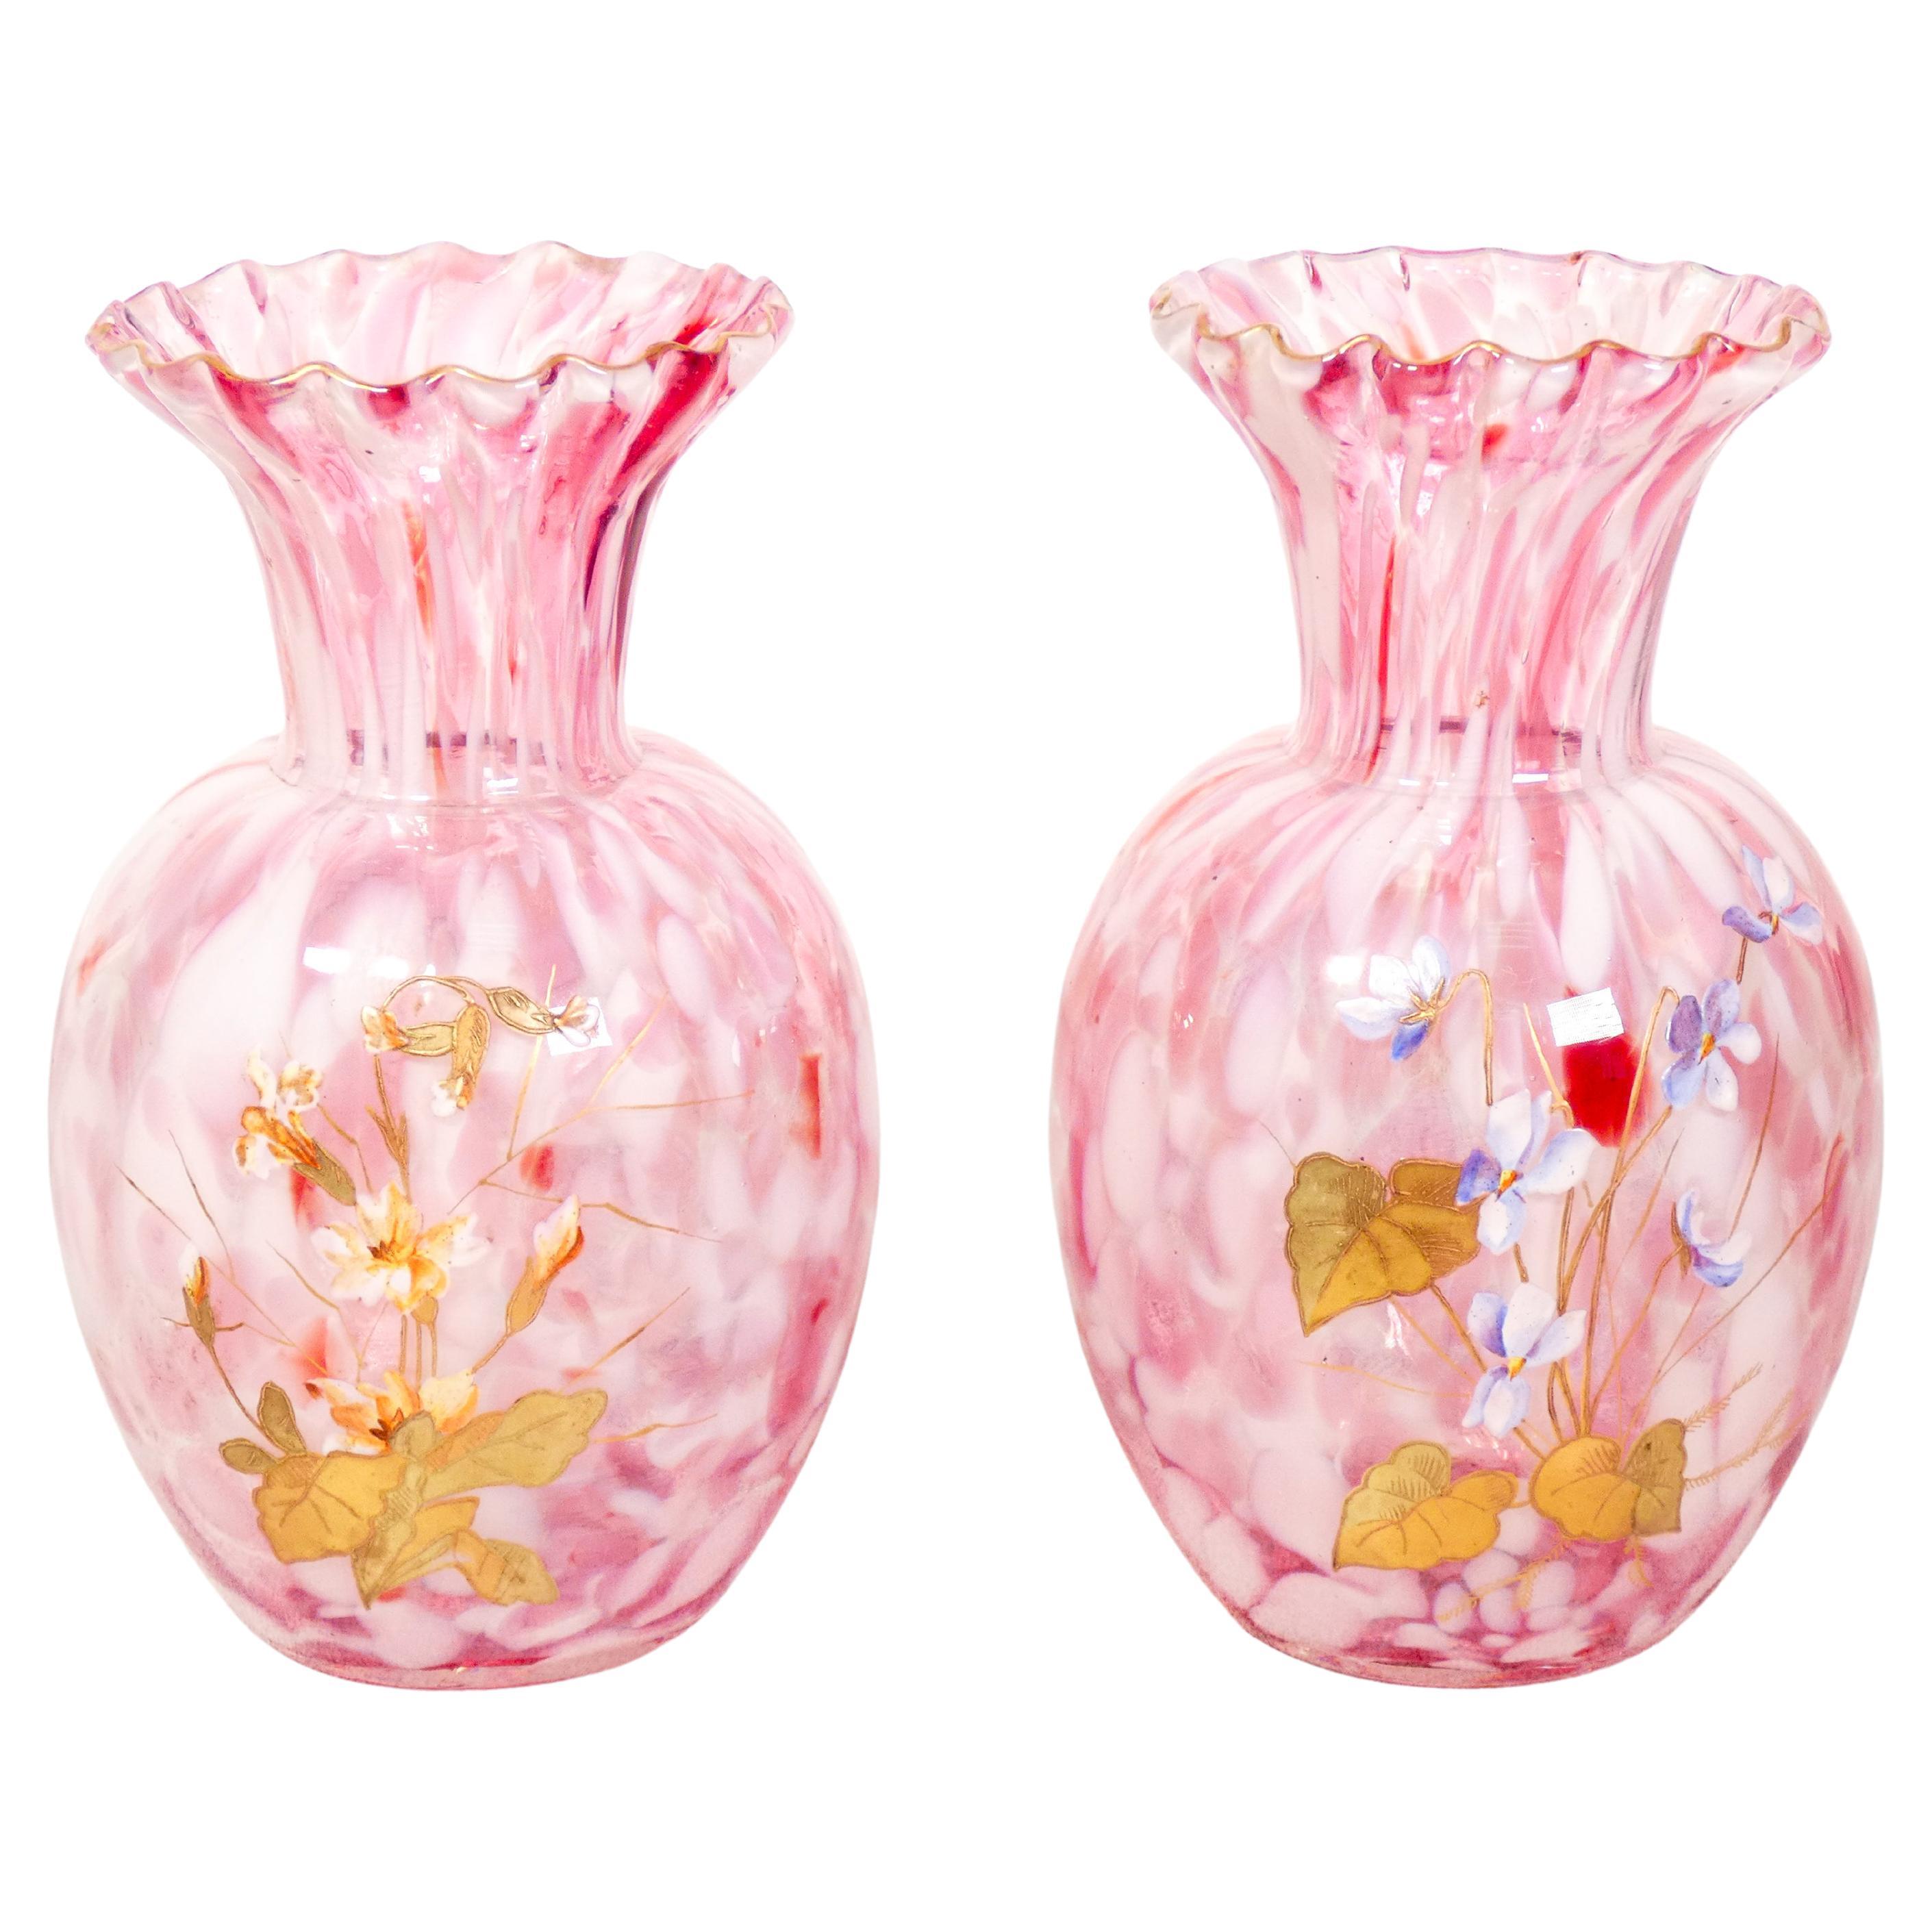 Vasen aus mundgeblasenem Glas, „Verrerie Saint Denis“ „post Legras“, 1800, Paar